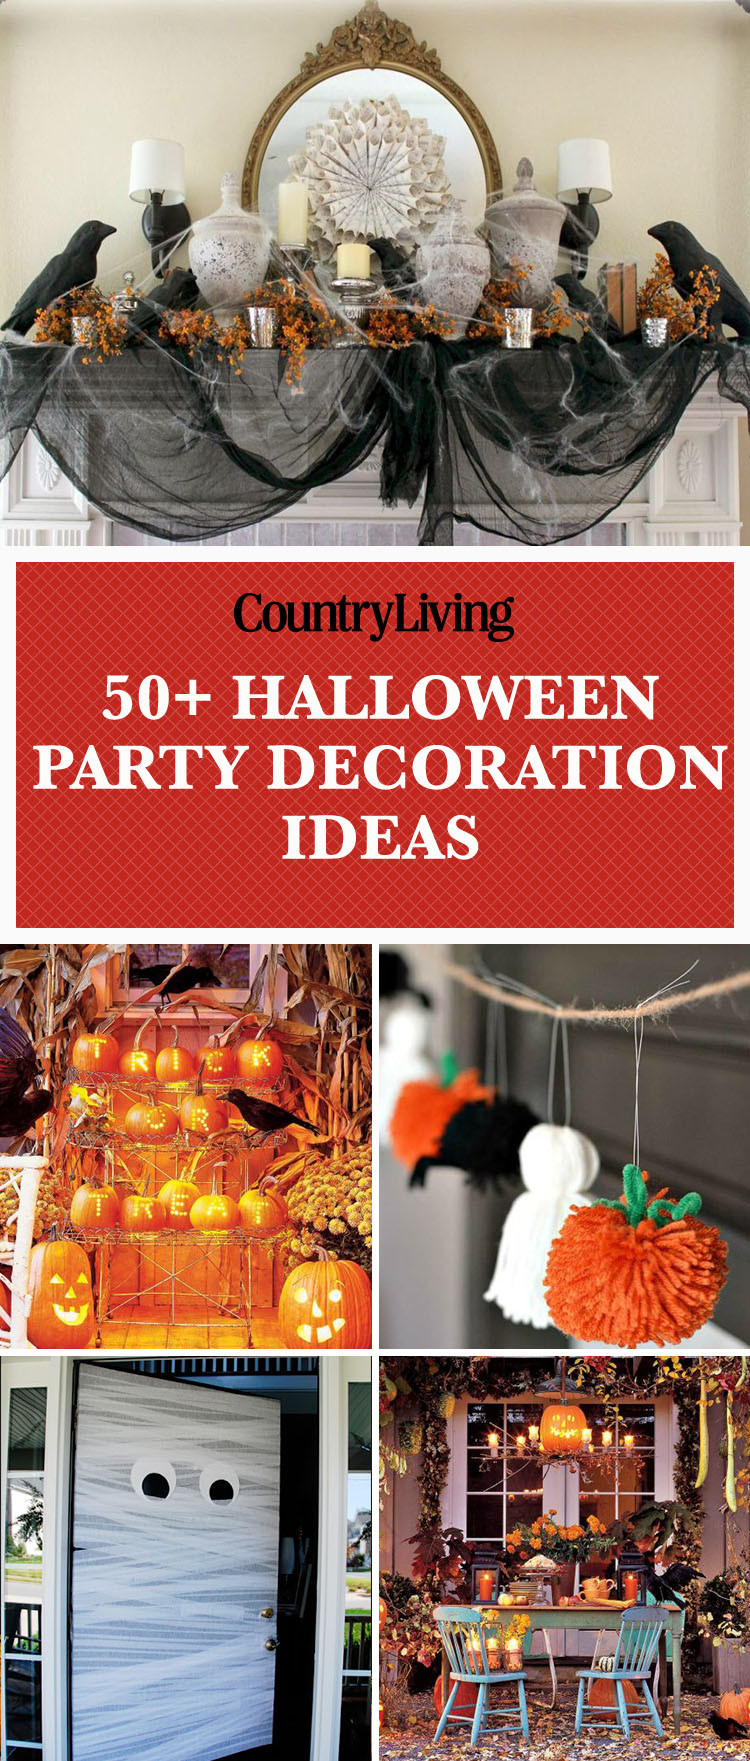 Halloween Party Centerpieces
 56 Fun Halloween Party Decorating Ideas Spooky Halloween